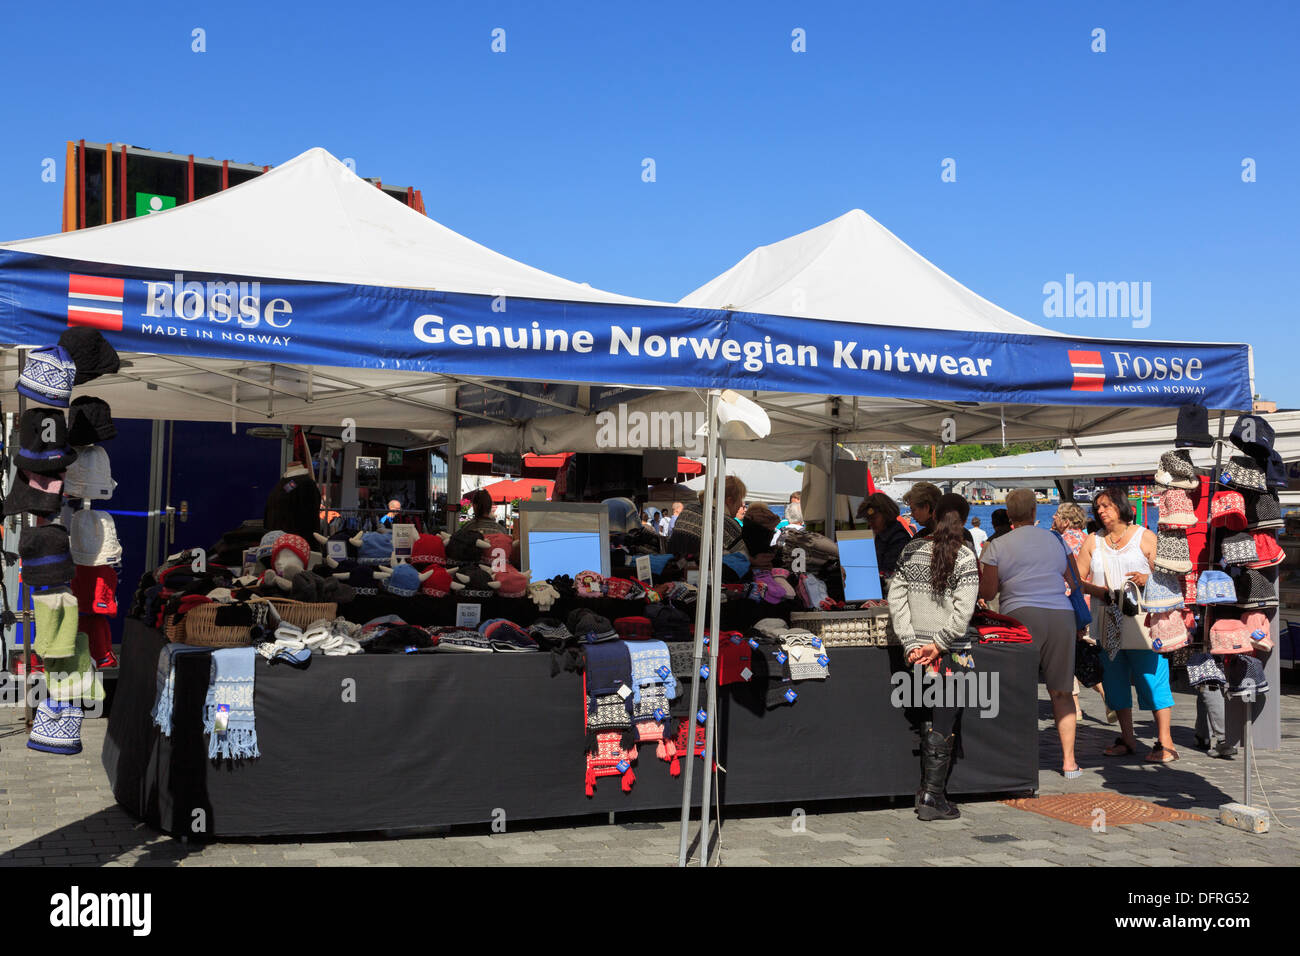 Market stall selling genuine Norwegian knitwear on Torget, Bergen, Hordaland, Norway, Scandinavia Stock Photo